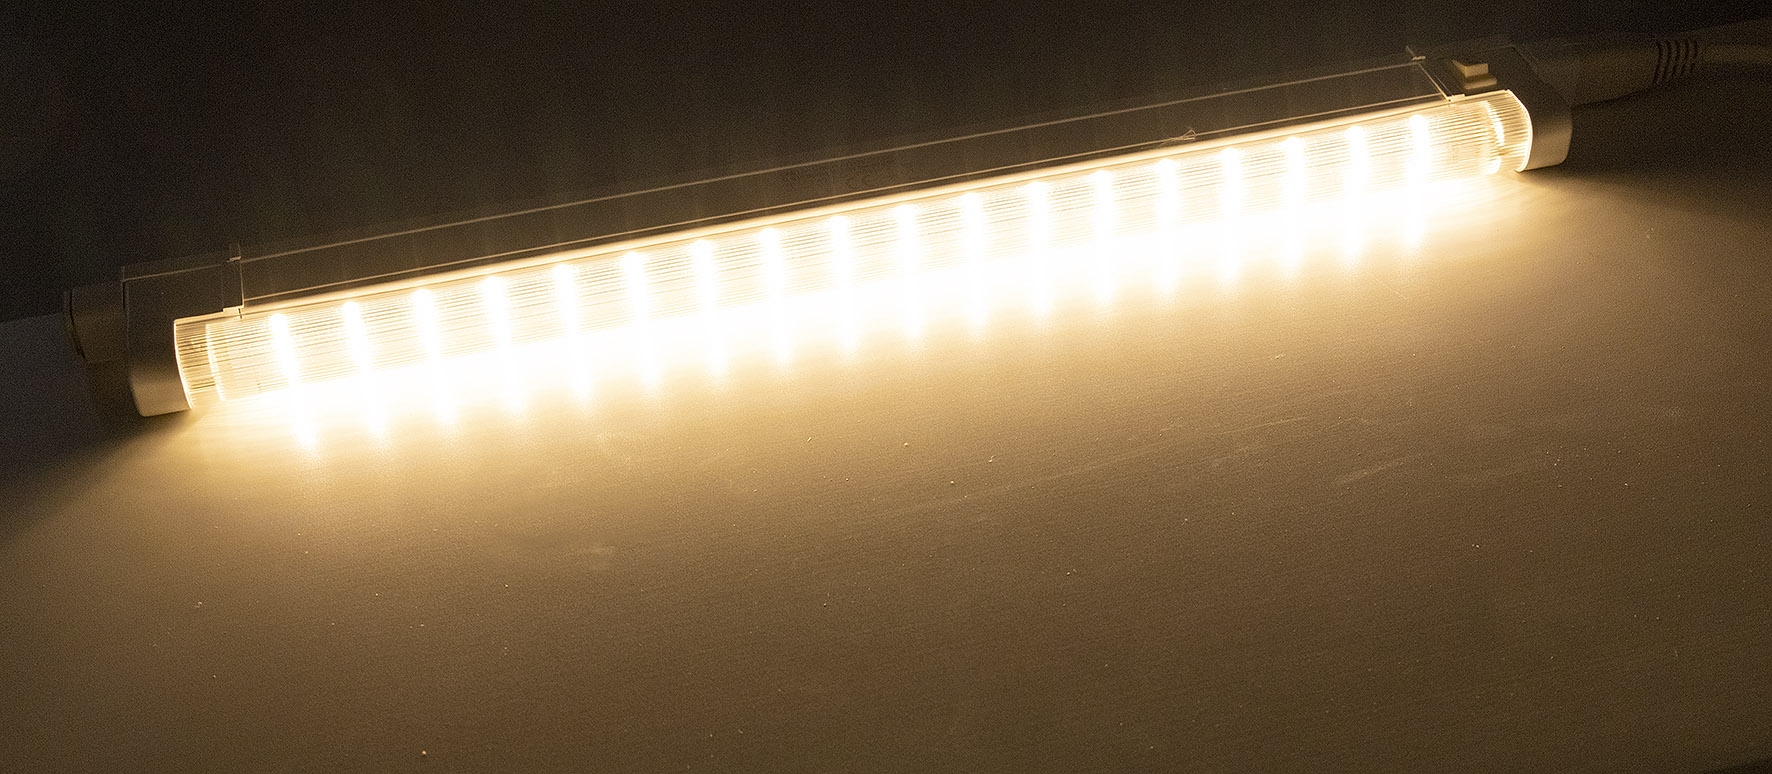 LED Unterbauleuchte "SMD pro" 40cm  - Bild 2